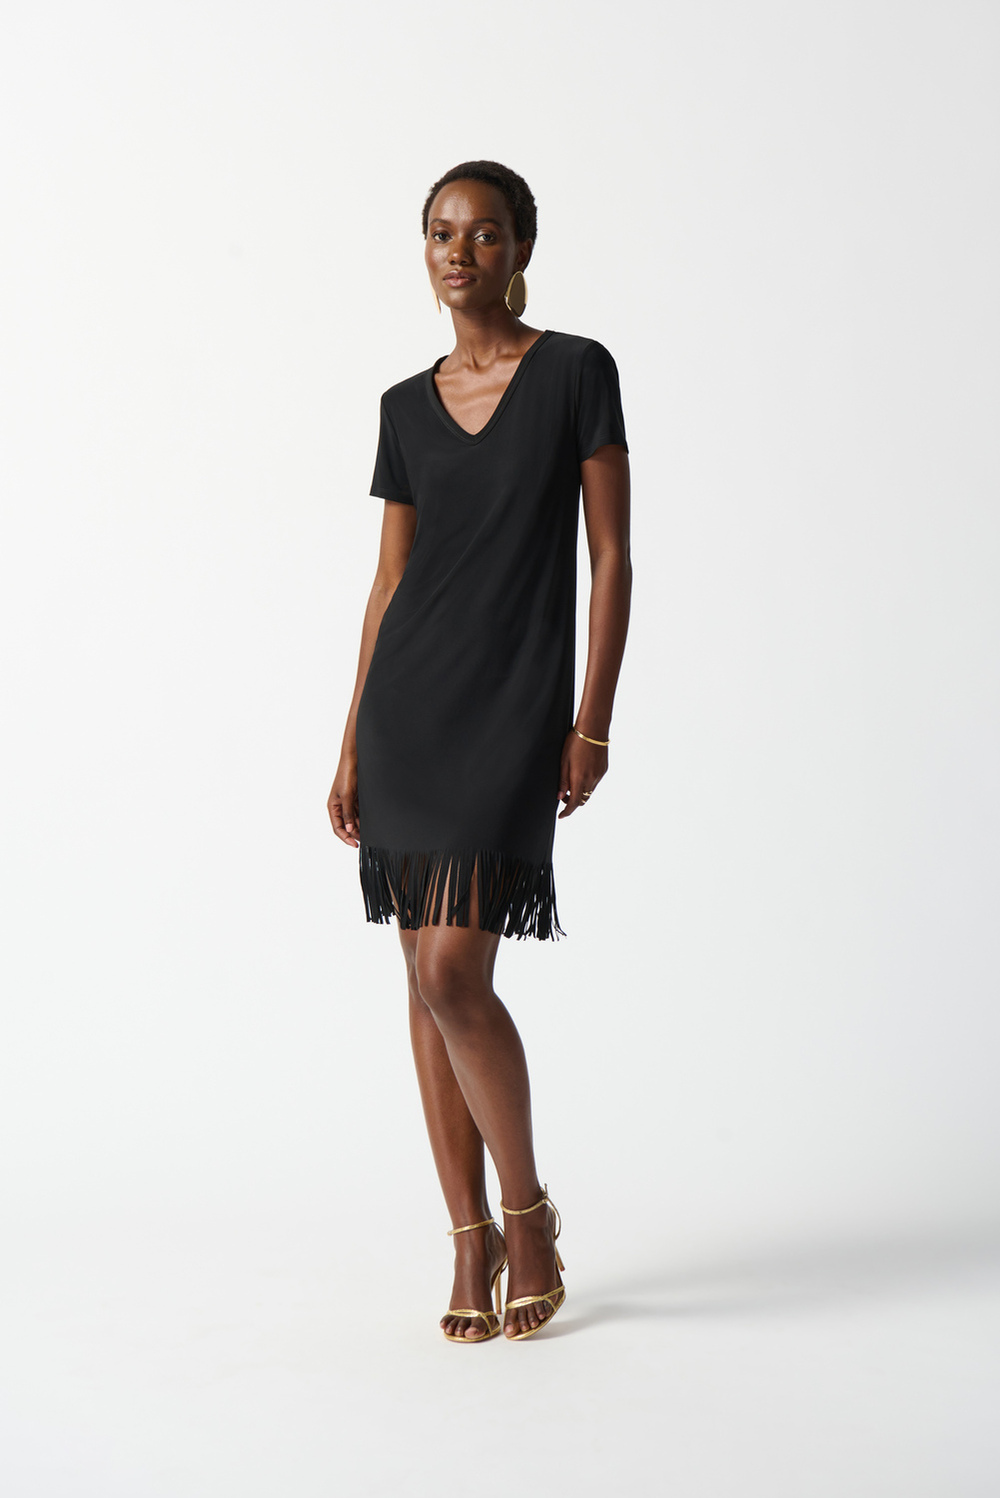 Fringe Detail Dress Style 242113. Black